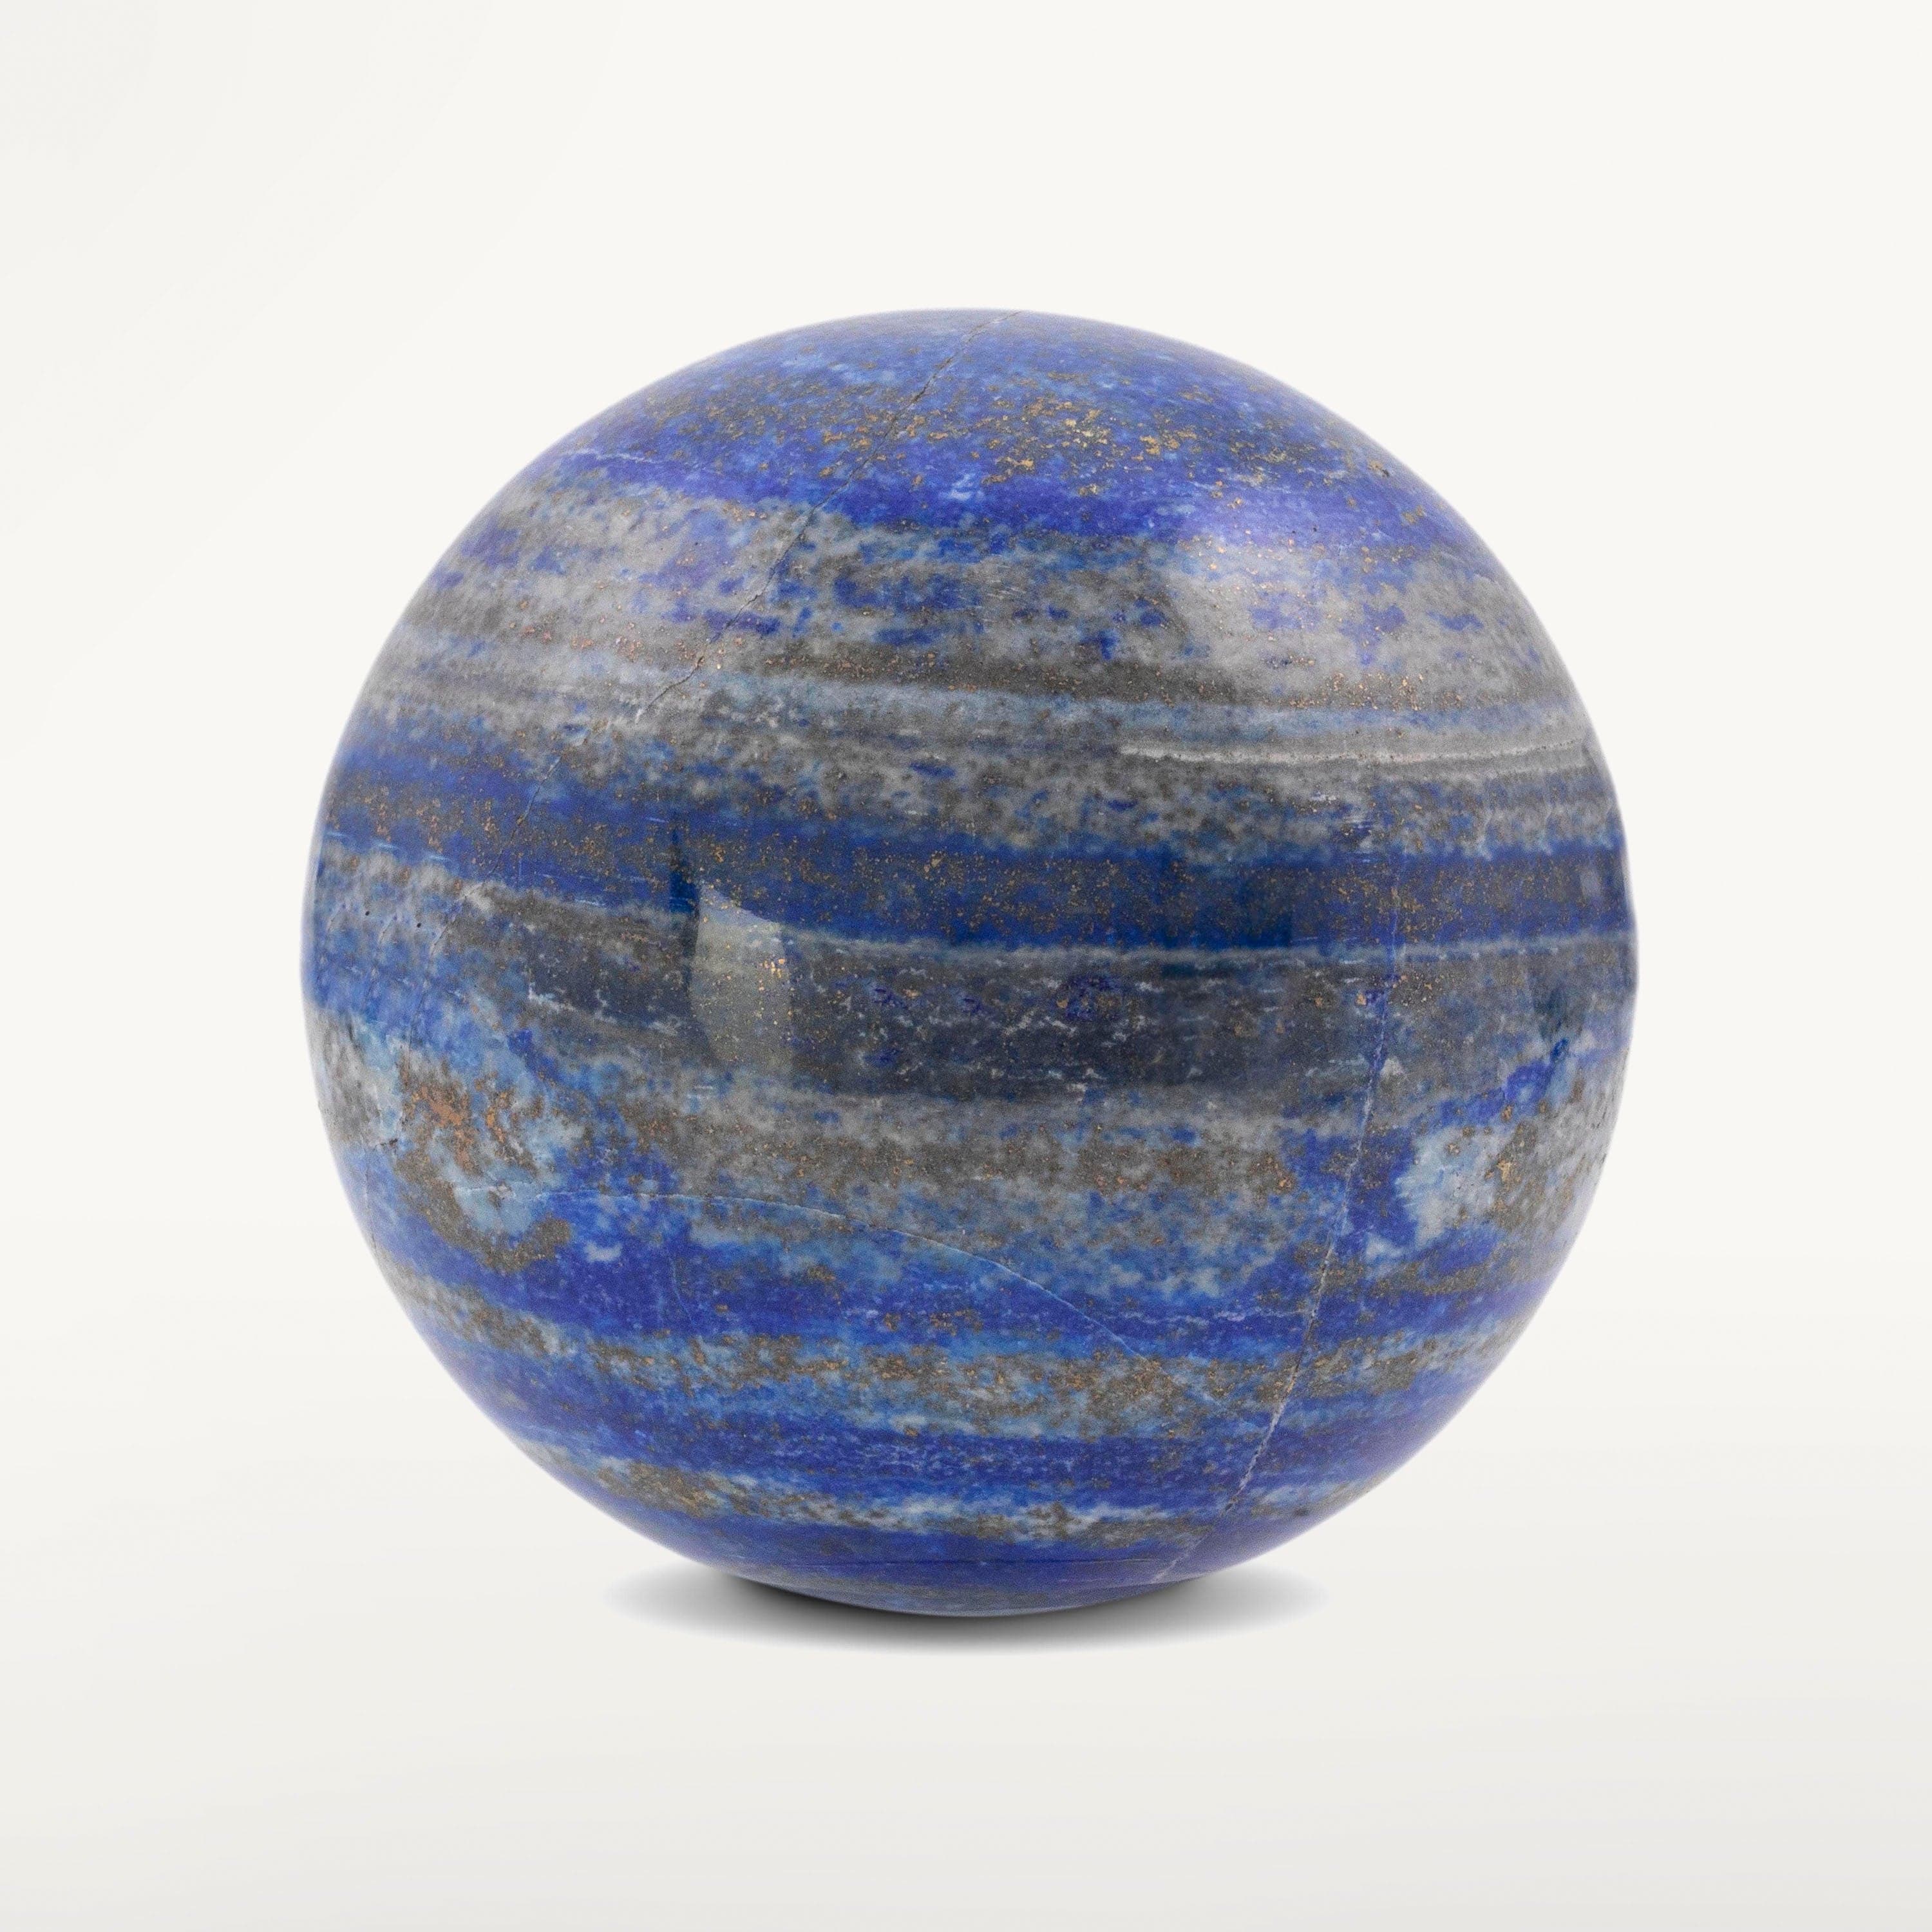 Kalifano Lapis Lapis Lazuli Sphere Carving 3 in. / 750 grams LPS900